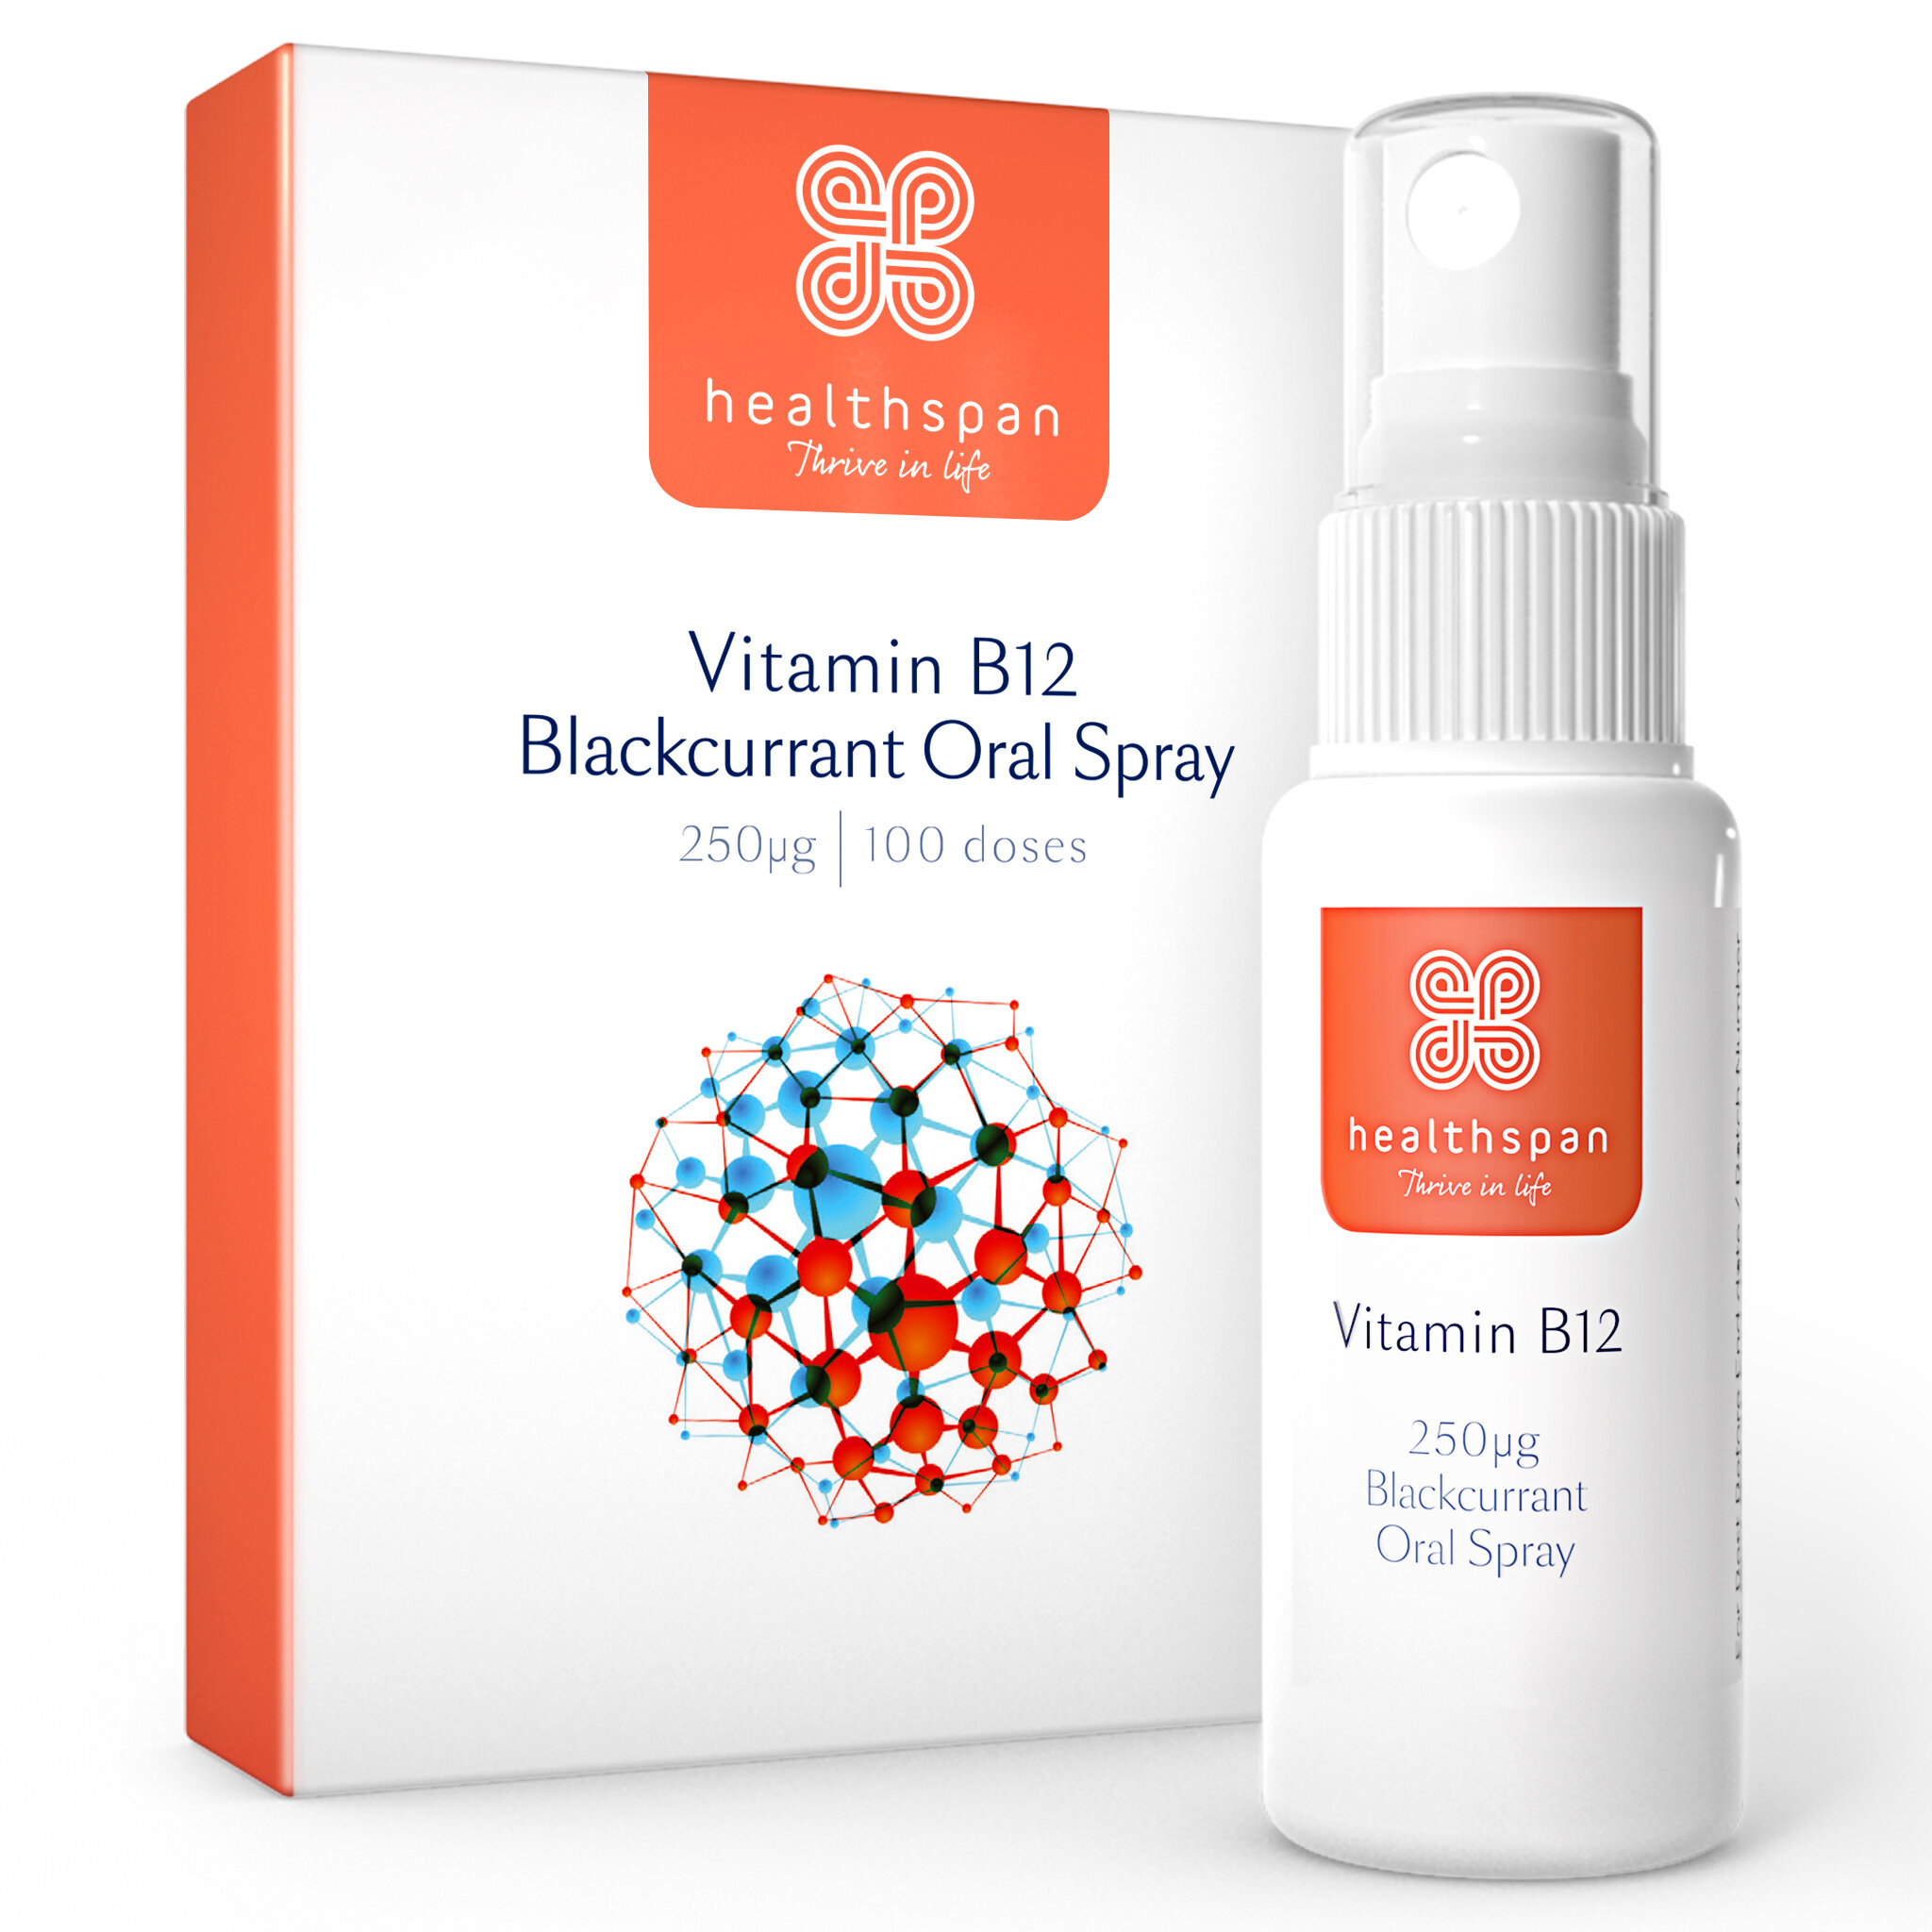 Healthspan Vitamin B12 Blackcurrant Oral Spray, 15ml, Blackcurrant